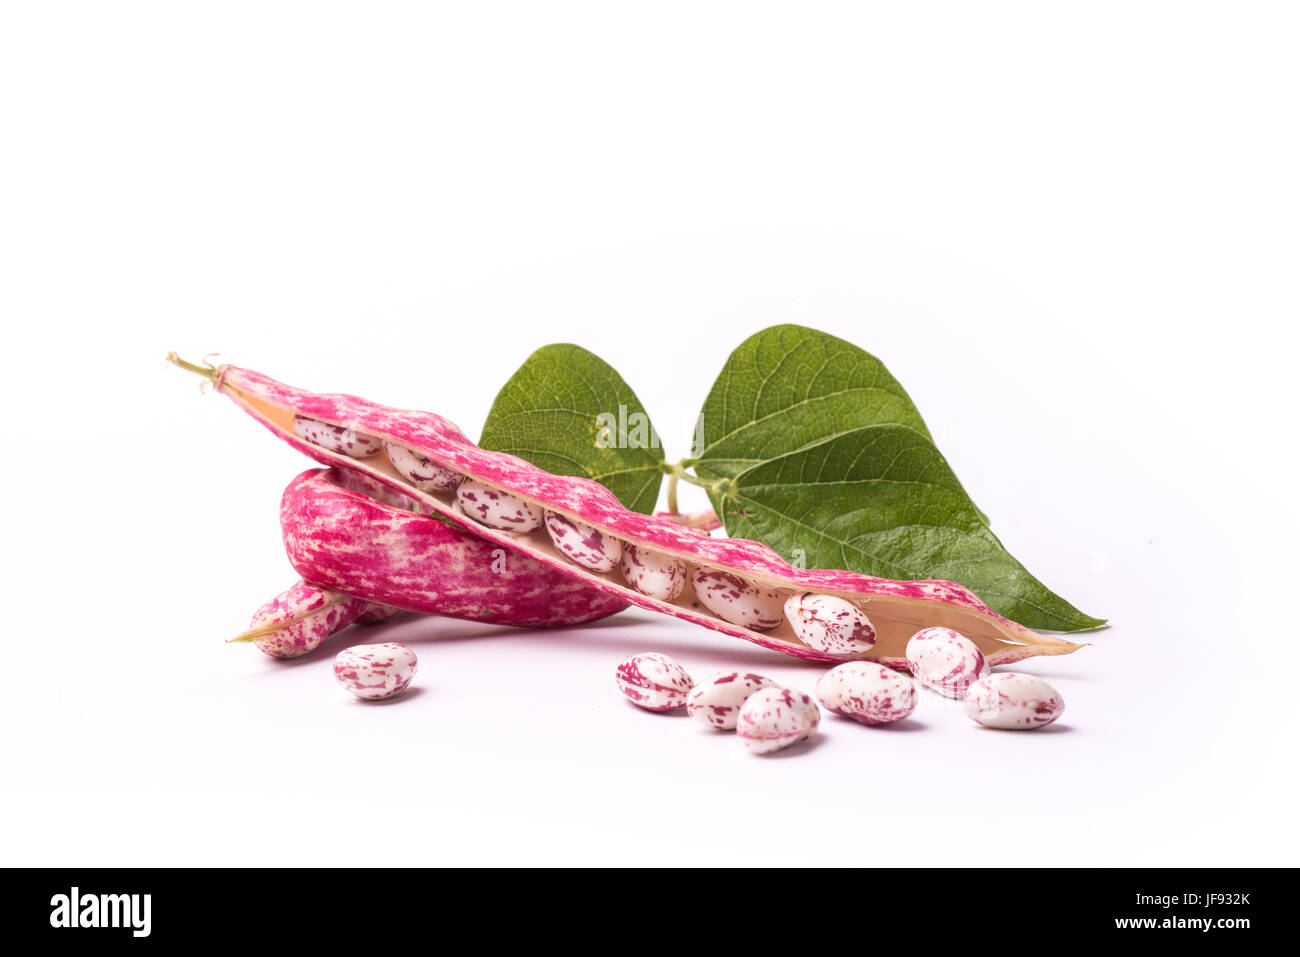 Common beans or phaseolus vulgaris on isolated white background Stock Photo